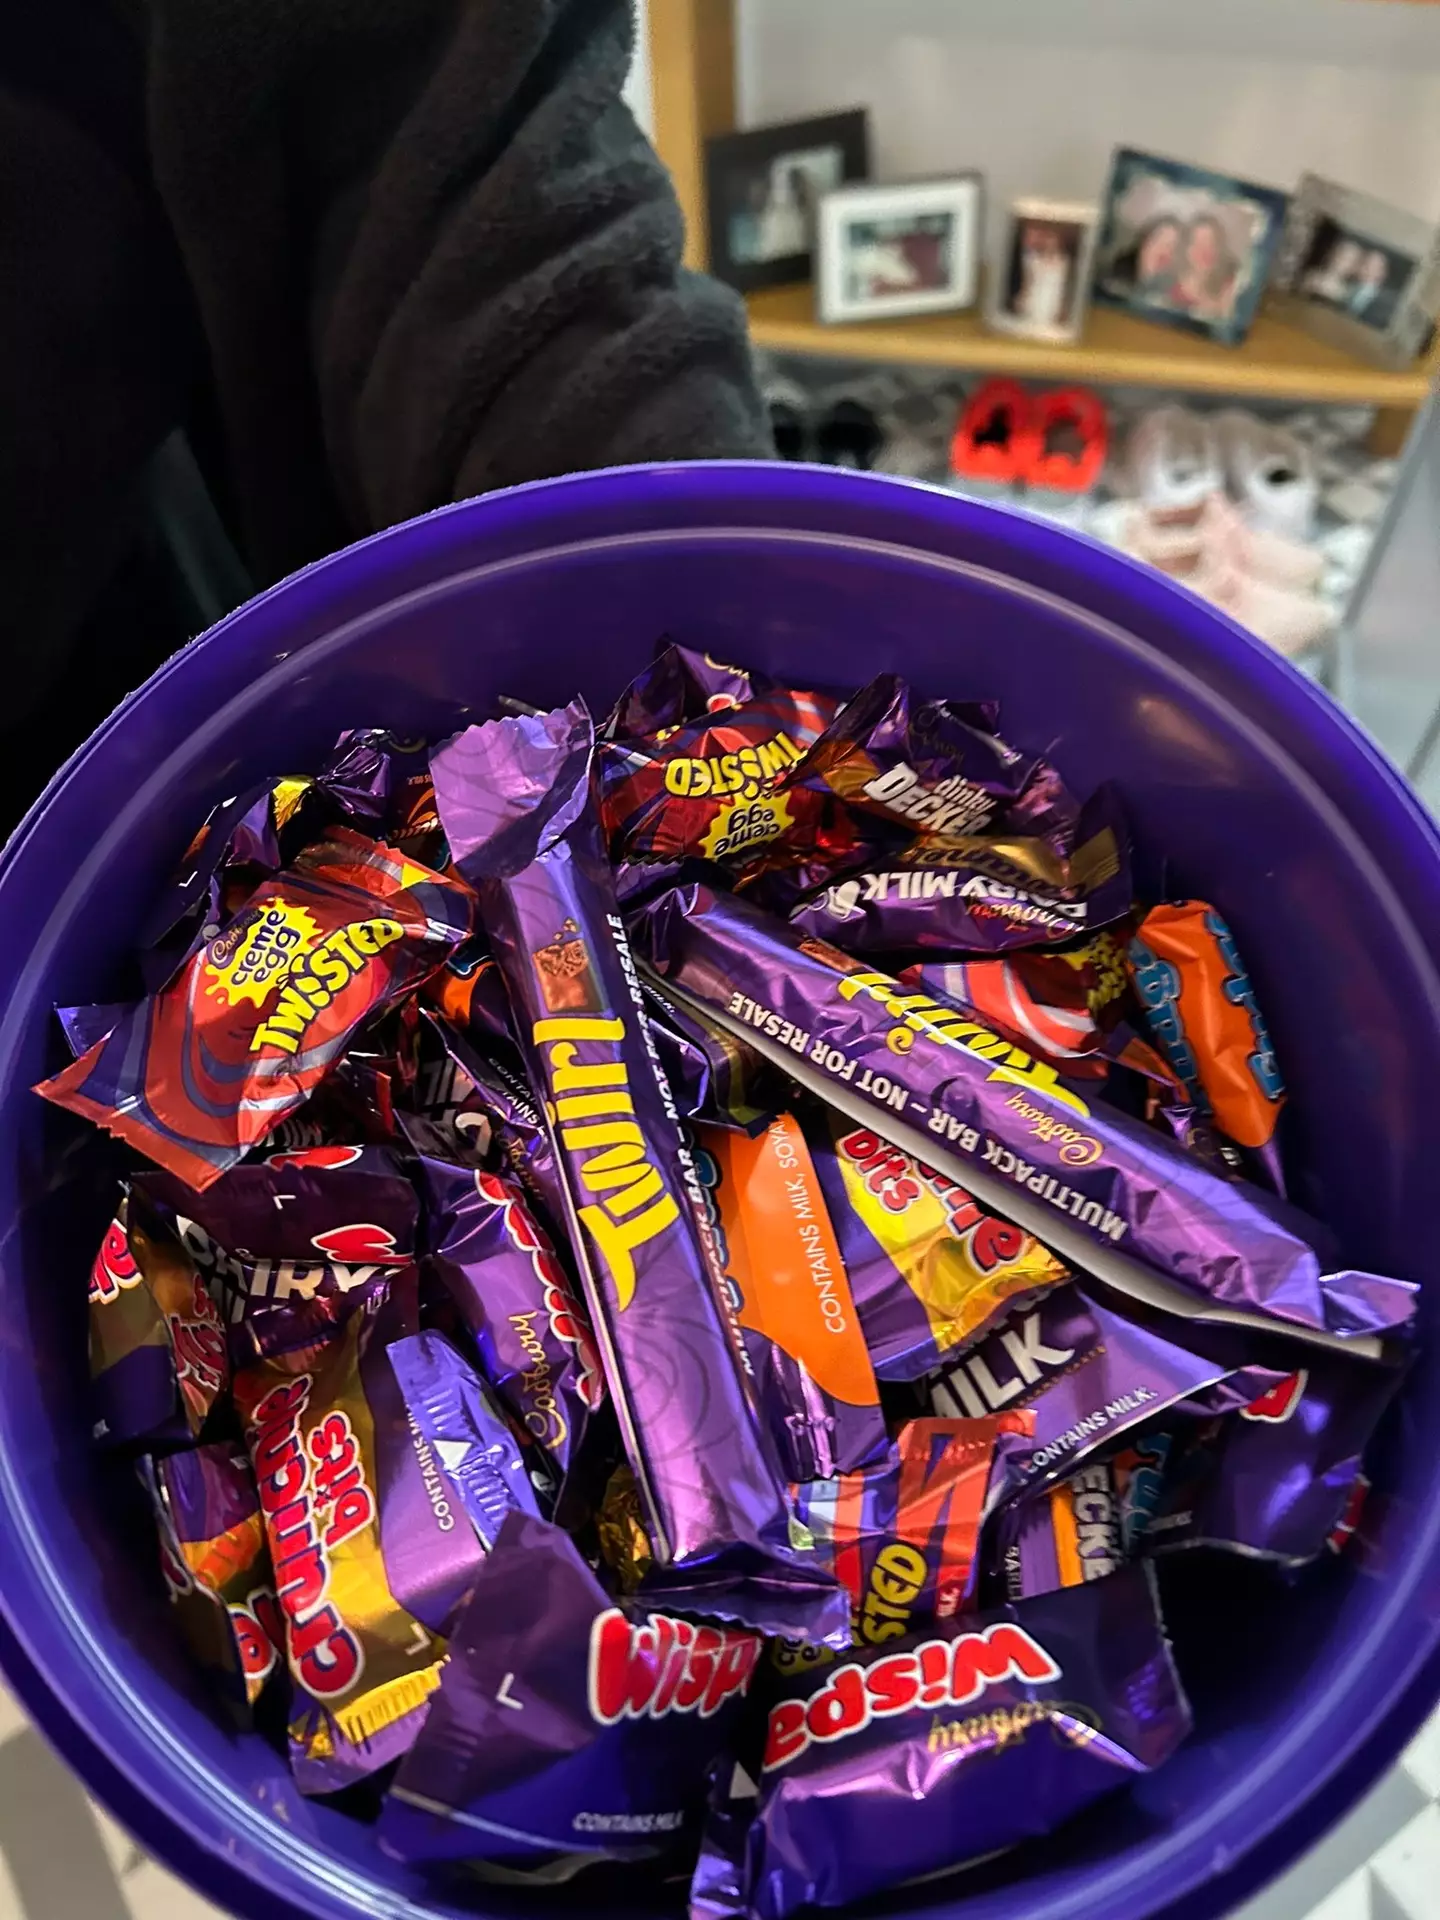 A Cadbury's customer wasn't happy when he opened the Heroes tub.